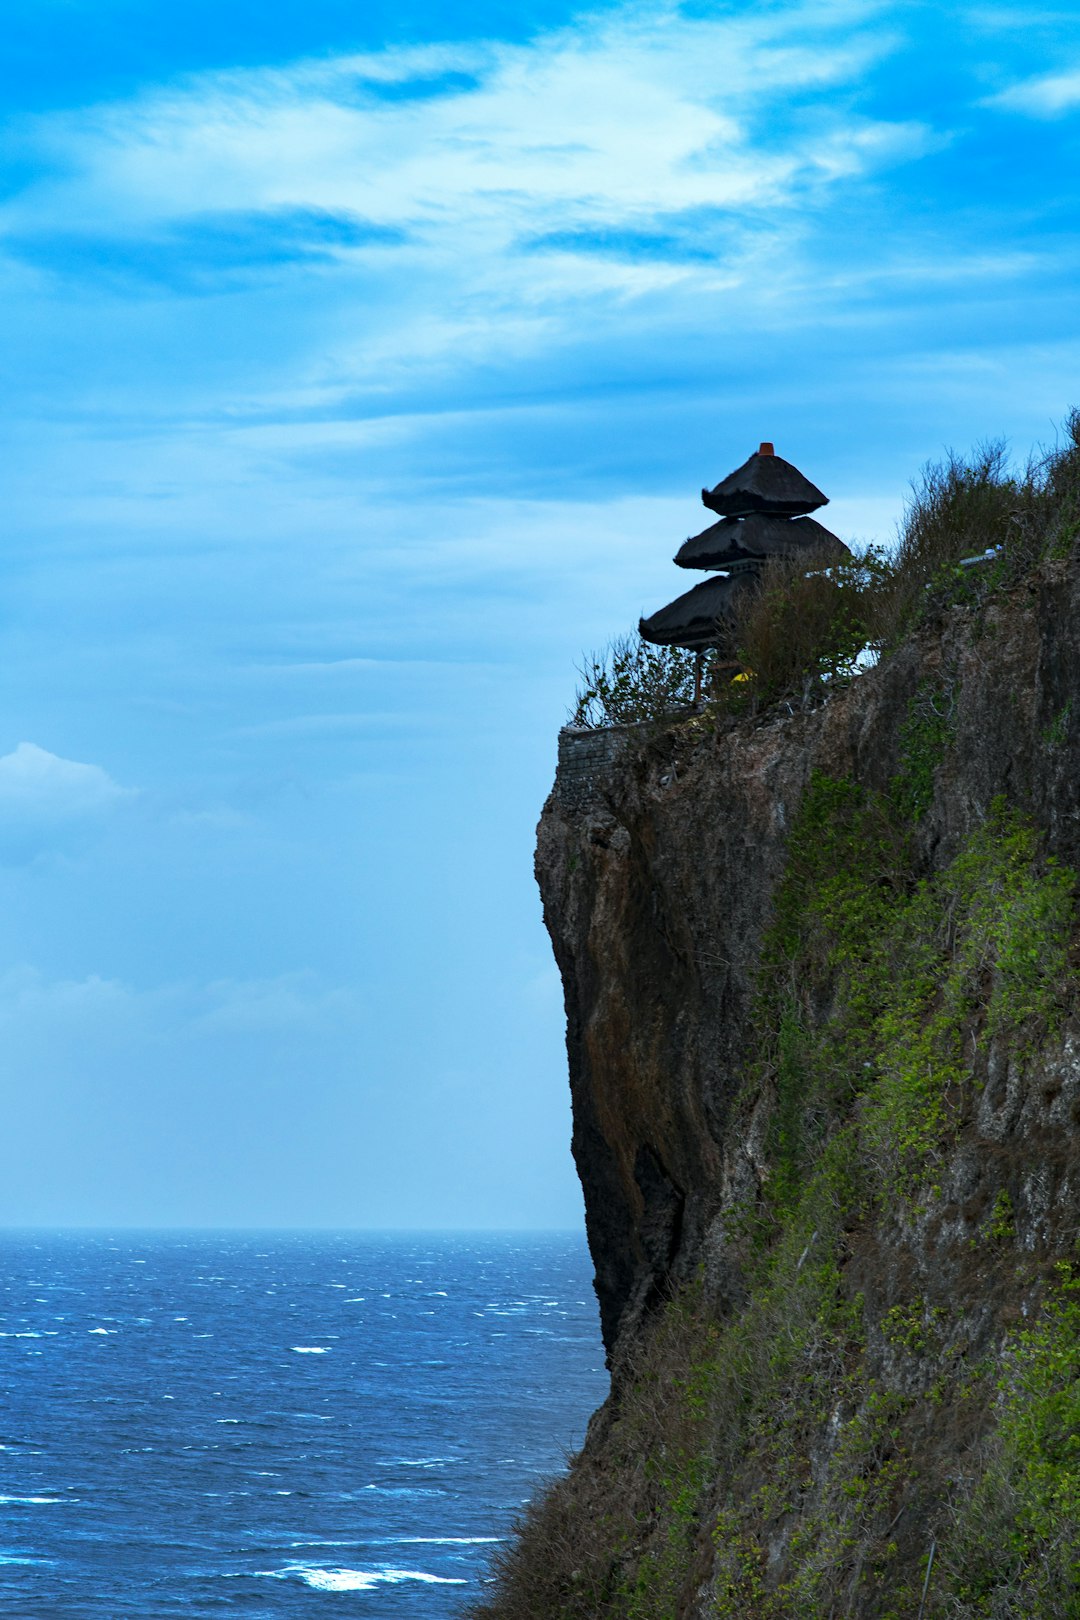 travelers stories about Cliff in Uluwatu, Indonesia